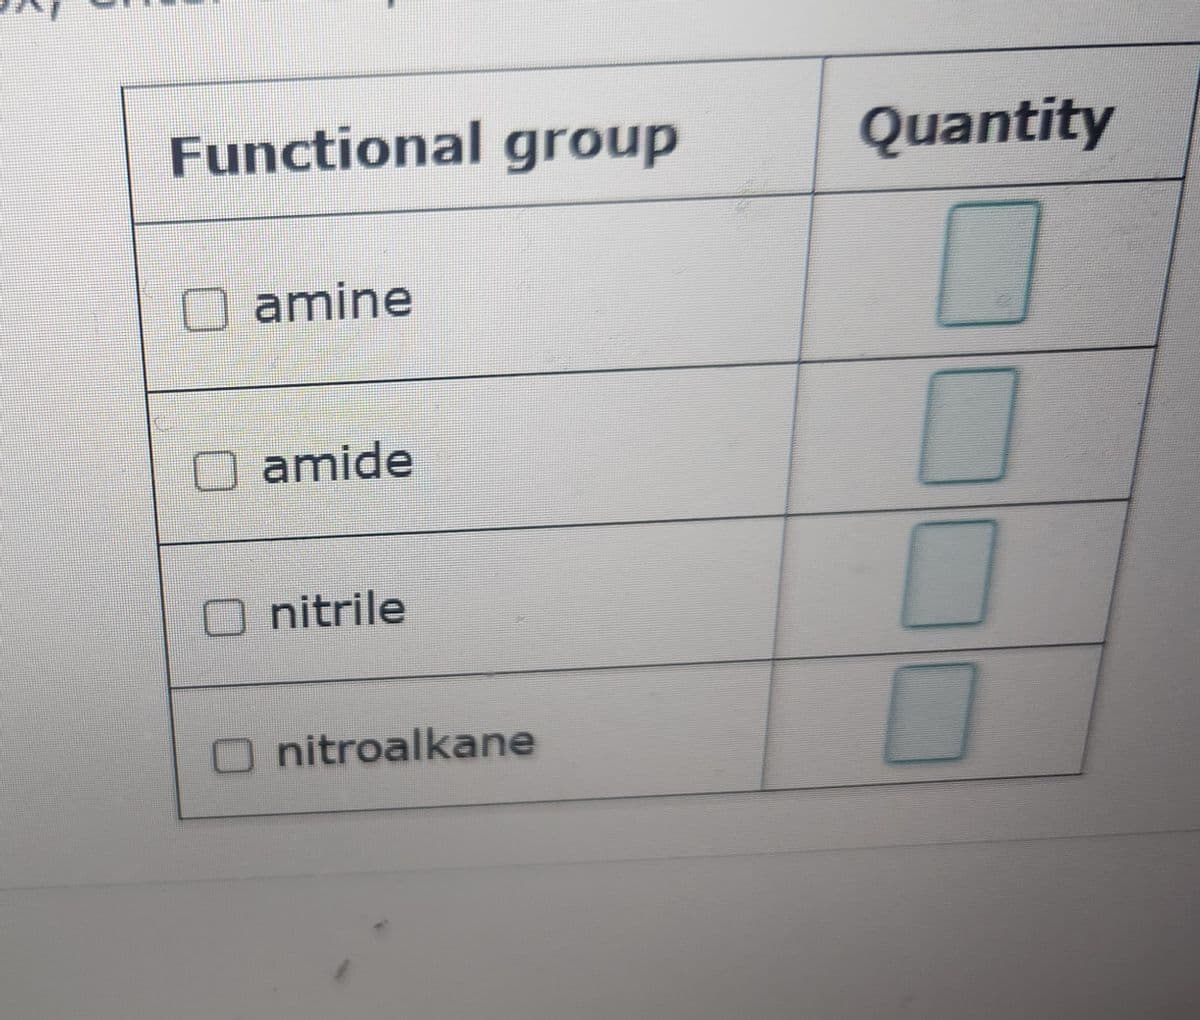 Functional group
amine
O amide
nitrile
nitroalkane
Quantity